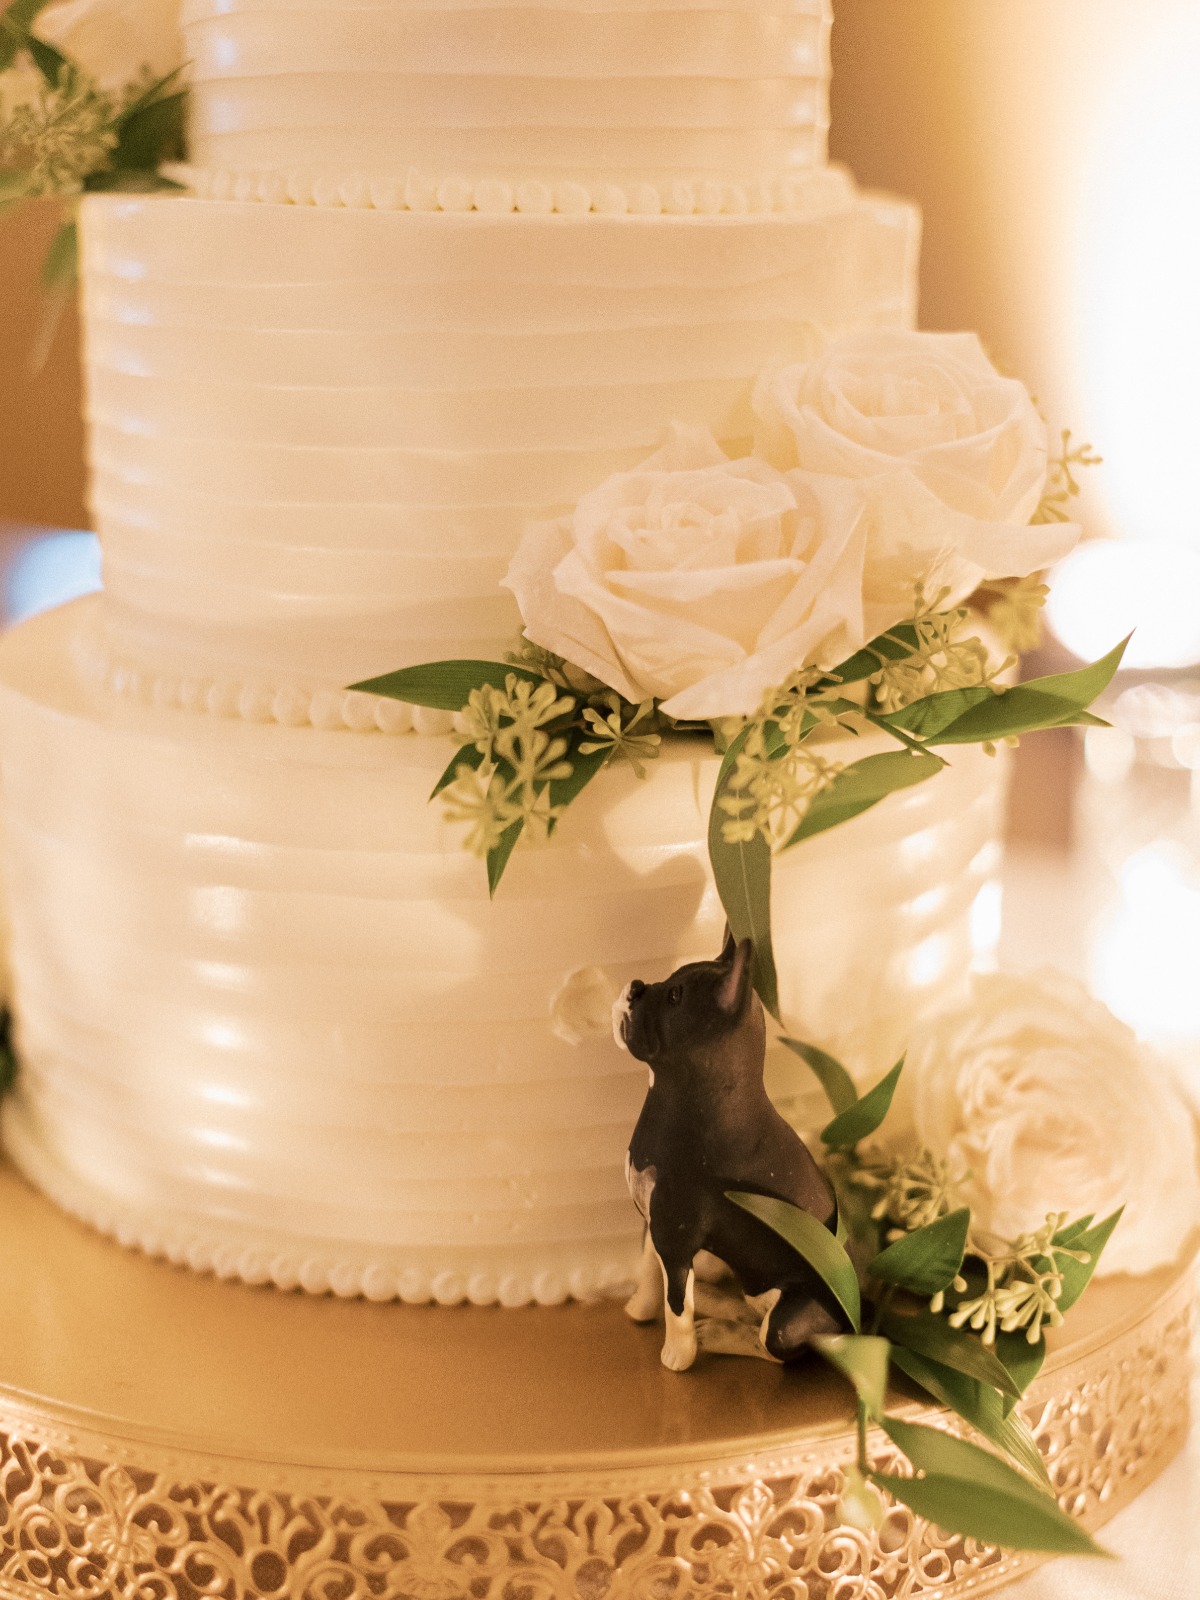 bead-trimmed wedding cake